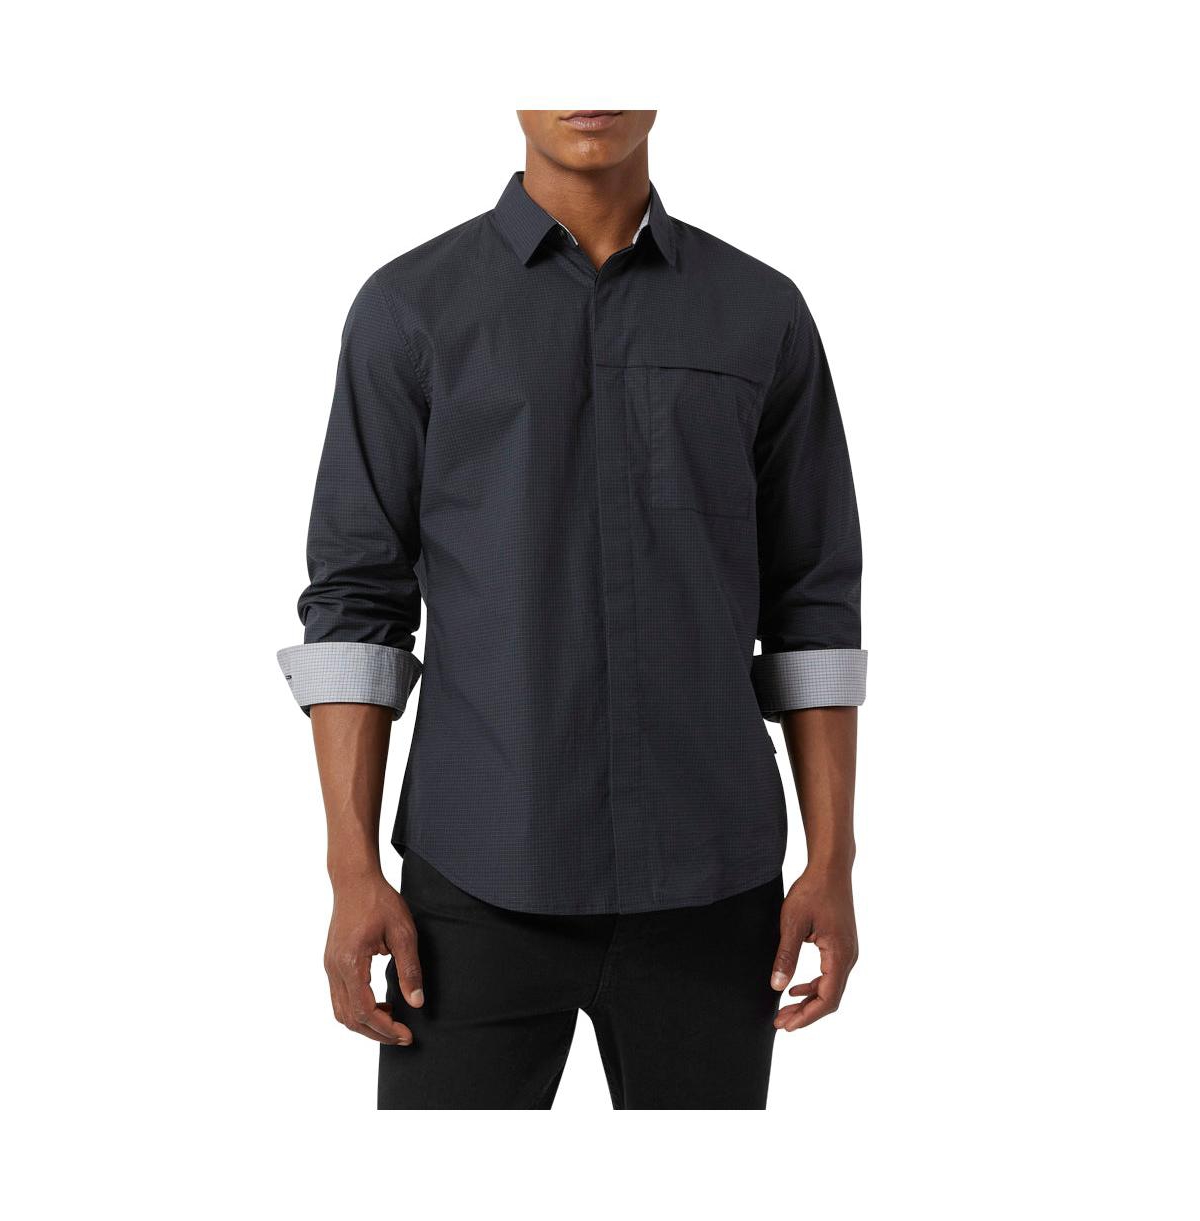 Men's City Grid Stretch Long Sleeve Shirt - Black